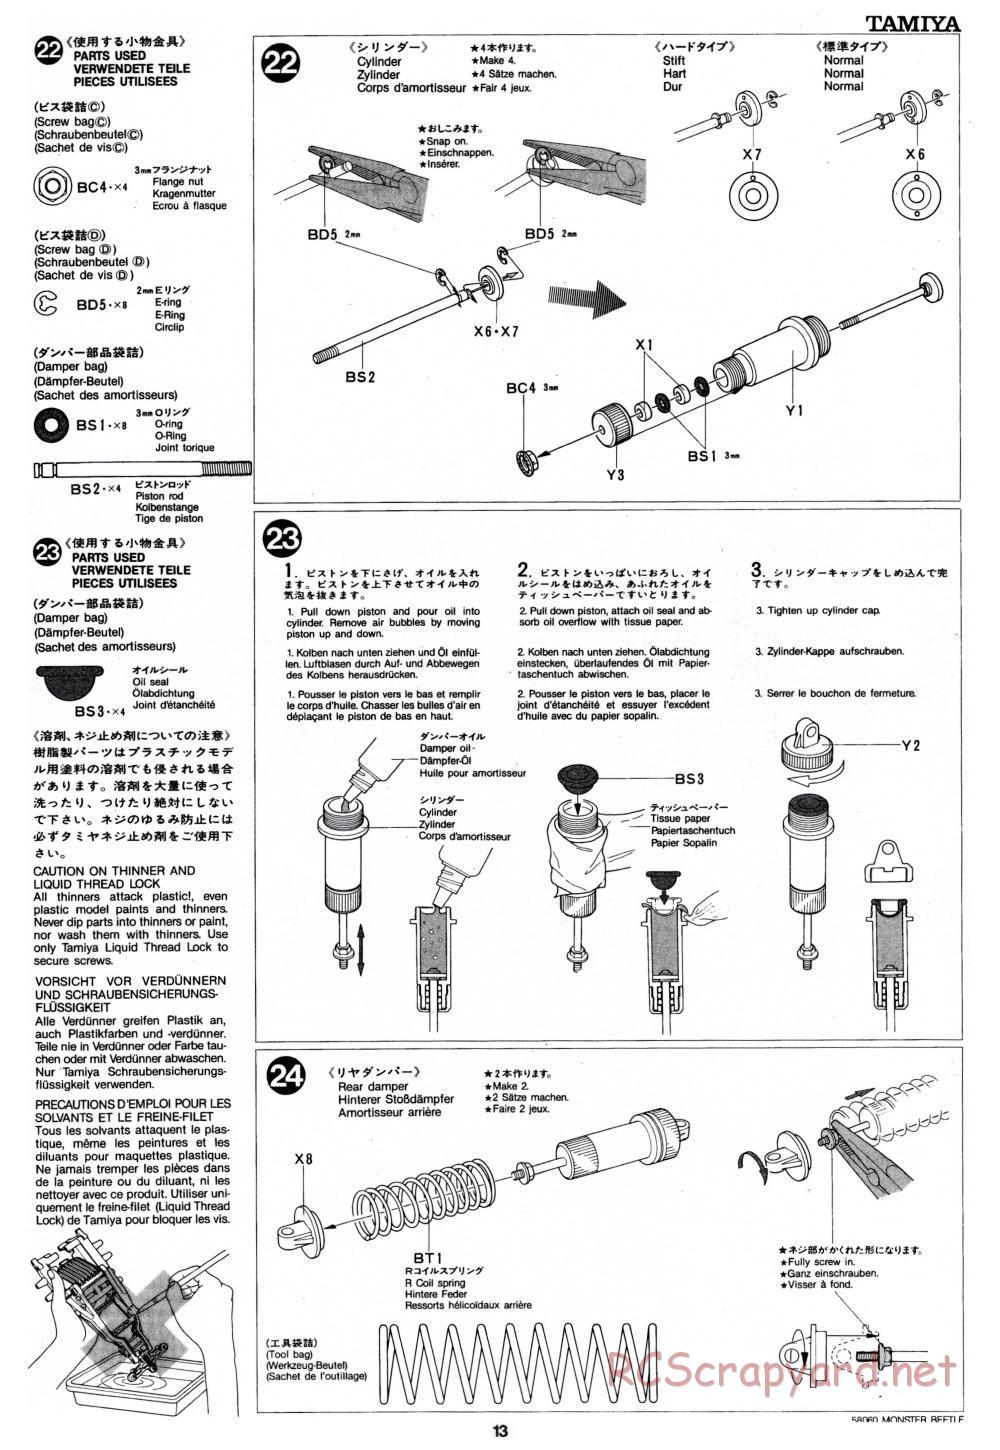 Tamiya - Monster Beetle - 58060 - Manual - Page 13